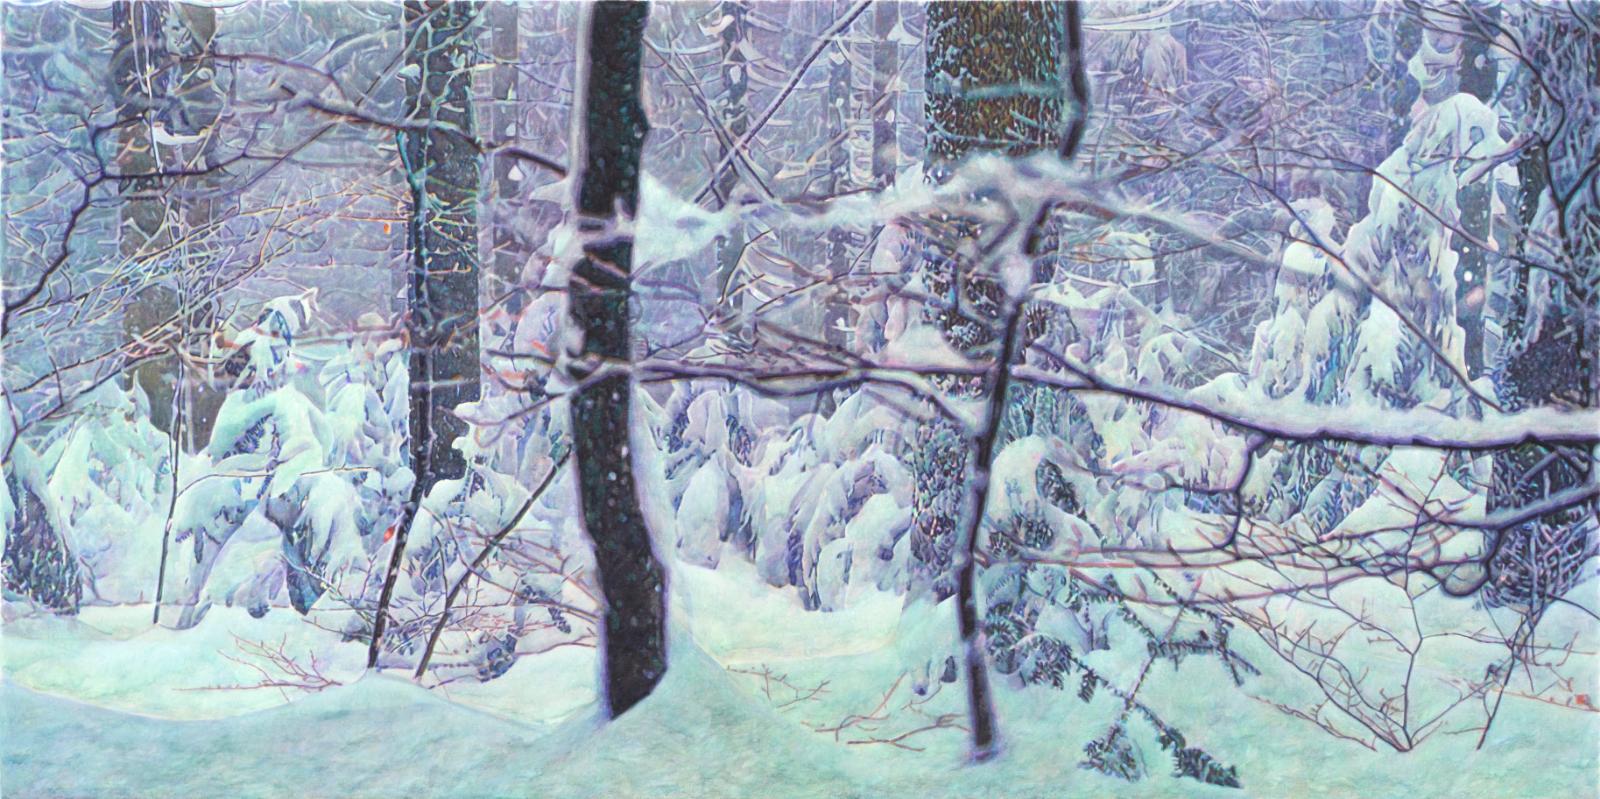 Thomas Schiela, Altreichenau I, 03.2018, Aquarell auf Leinwand, 130 cm x 260 cm, Preis auf Anfrage, sct001ko, Galerie Cyprian Brenner